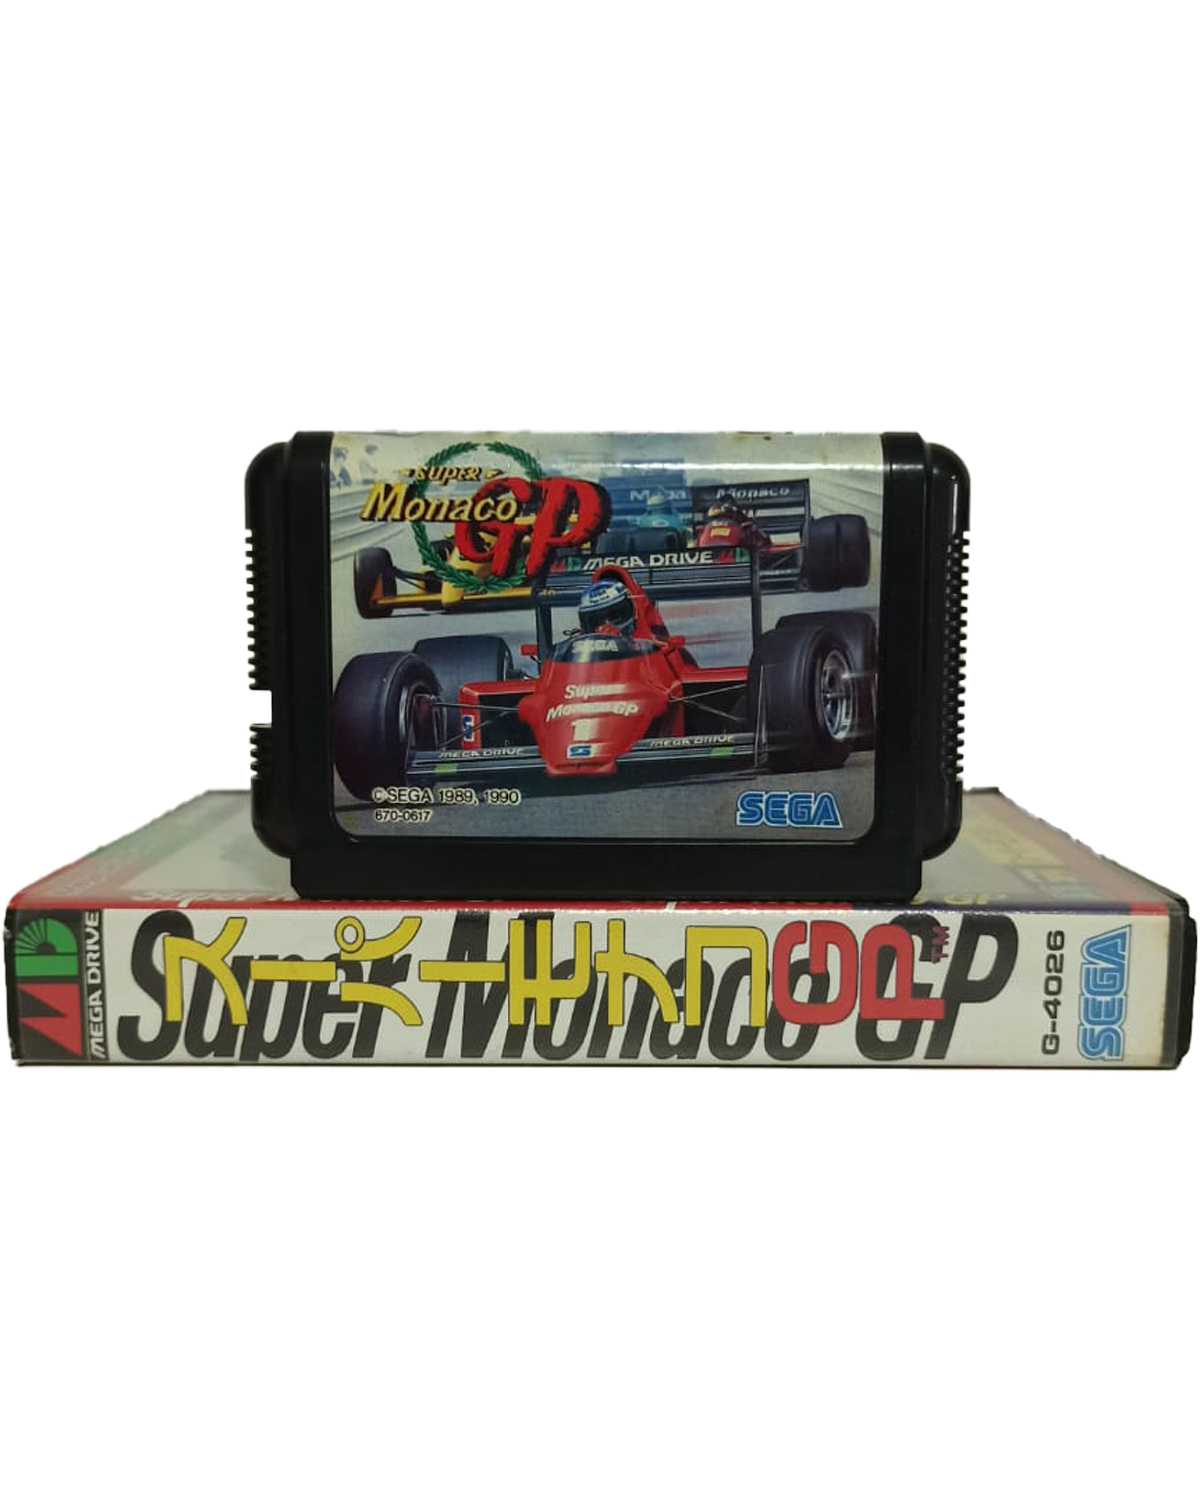 Super Monaco GP Japones - Mega Drive Original Usado